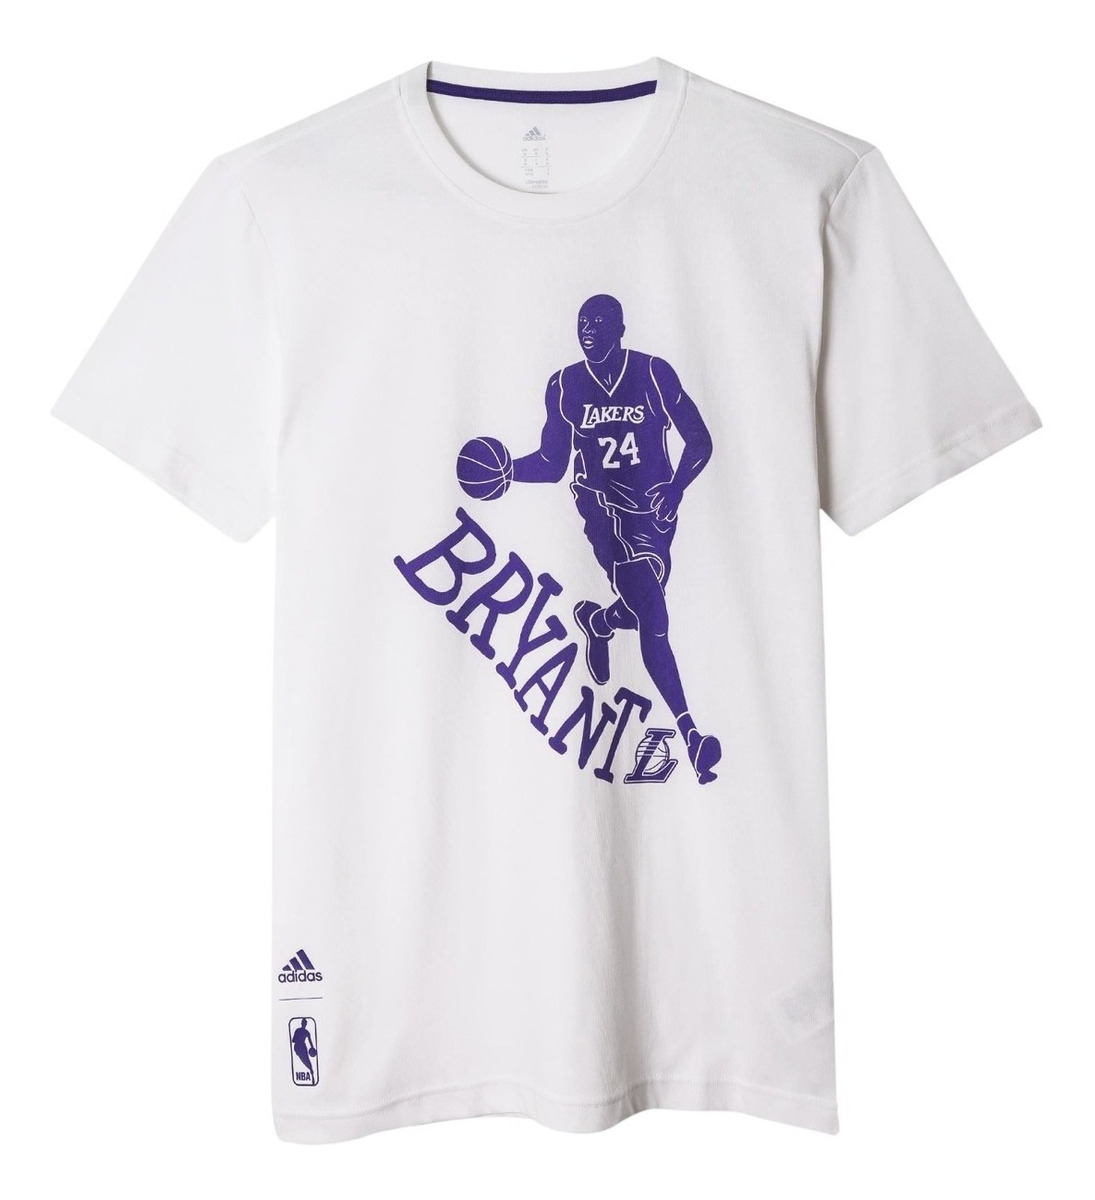 Camiseta Bryant Resonate Moda #24 [conn247] - €22.00 ...